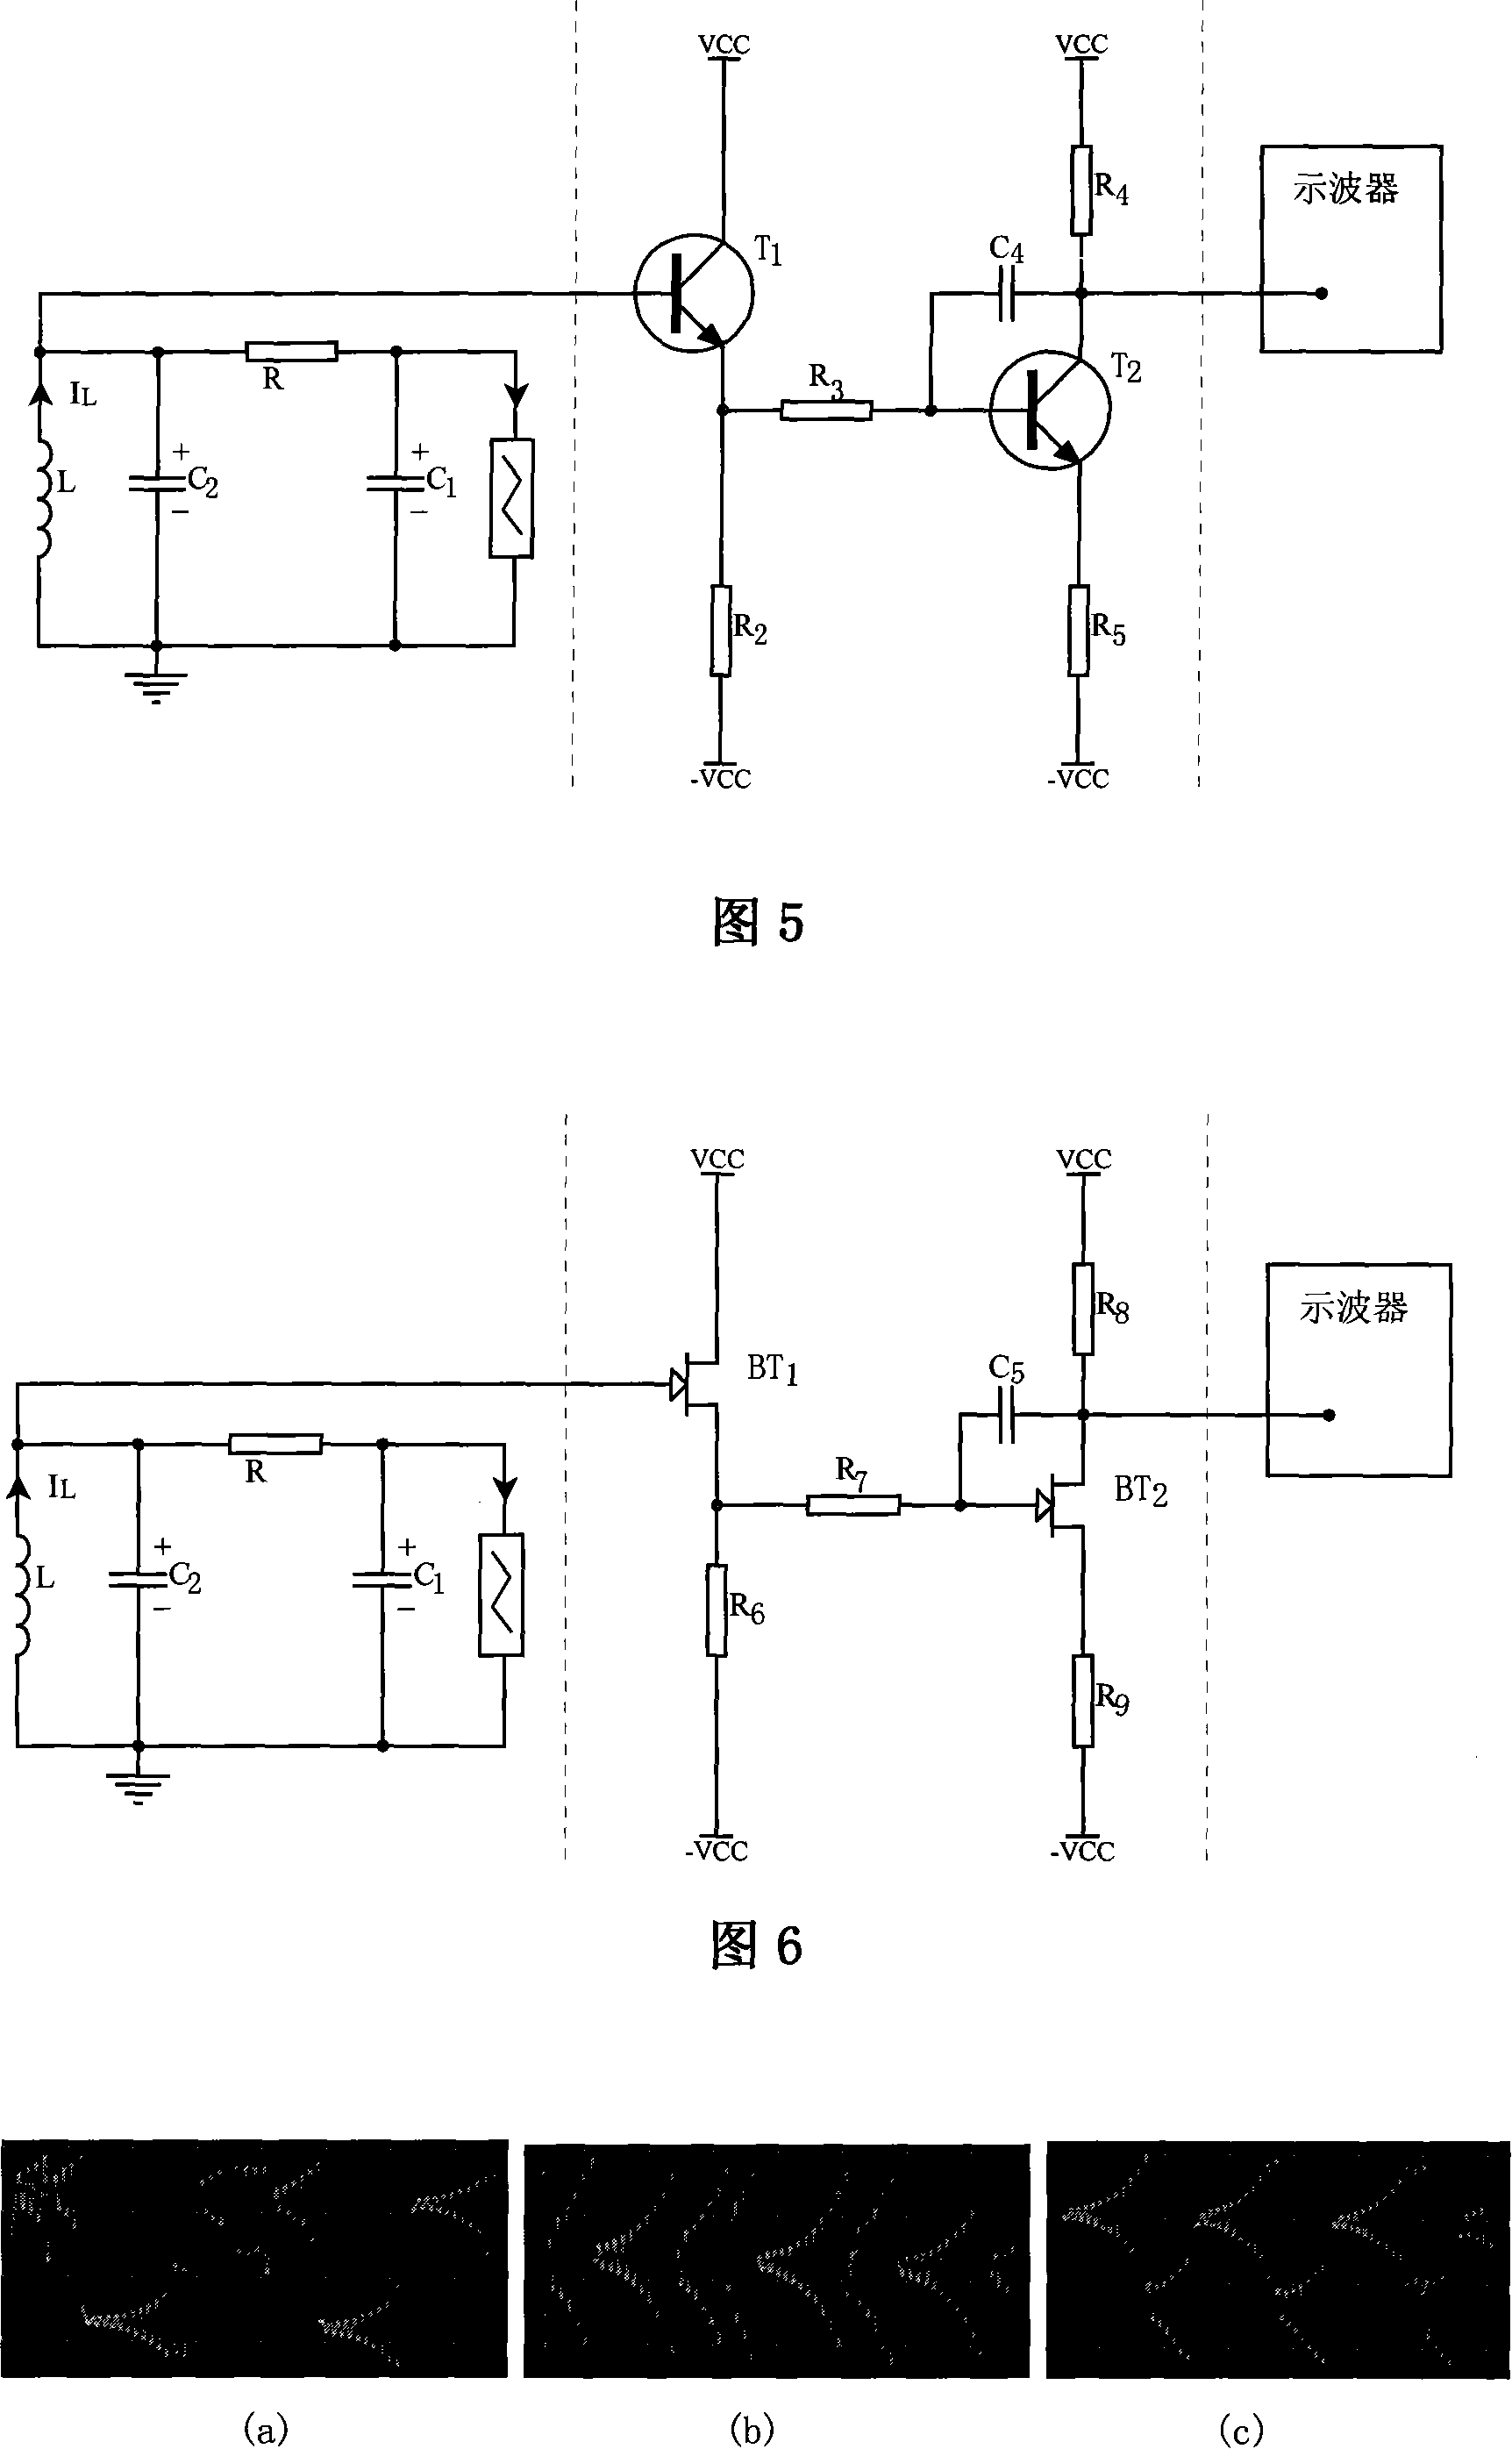 Cai's circuit inductor current oscilloscope display circuit